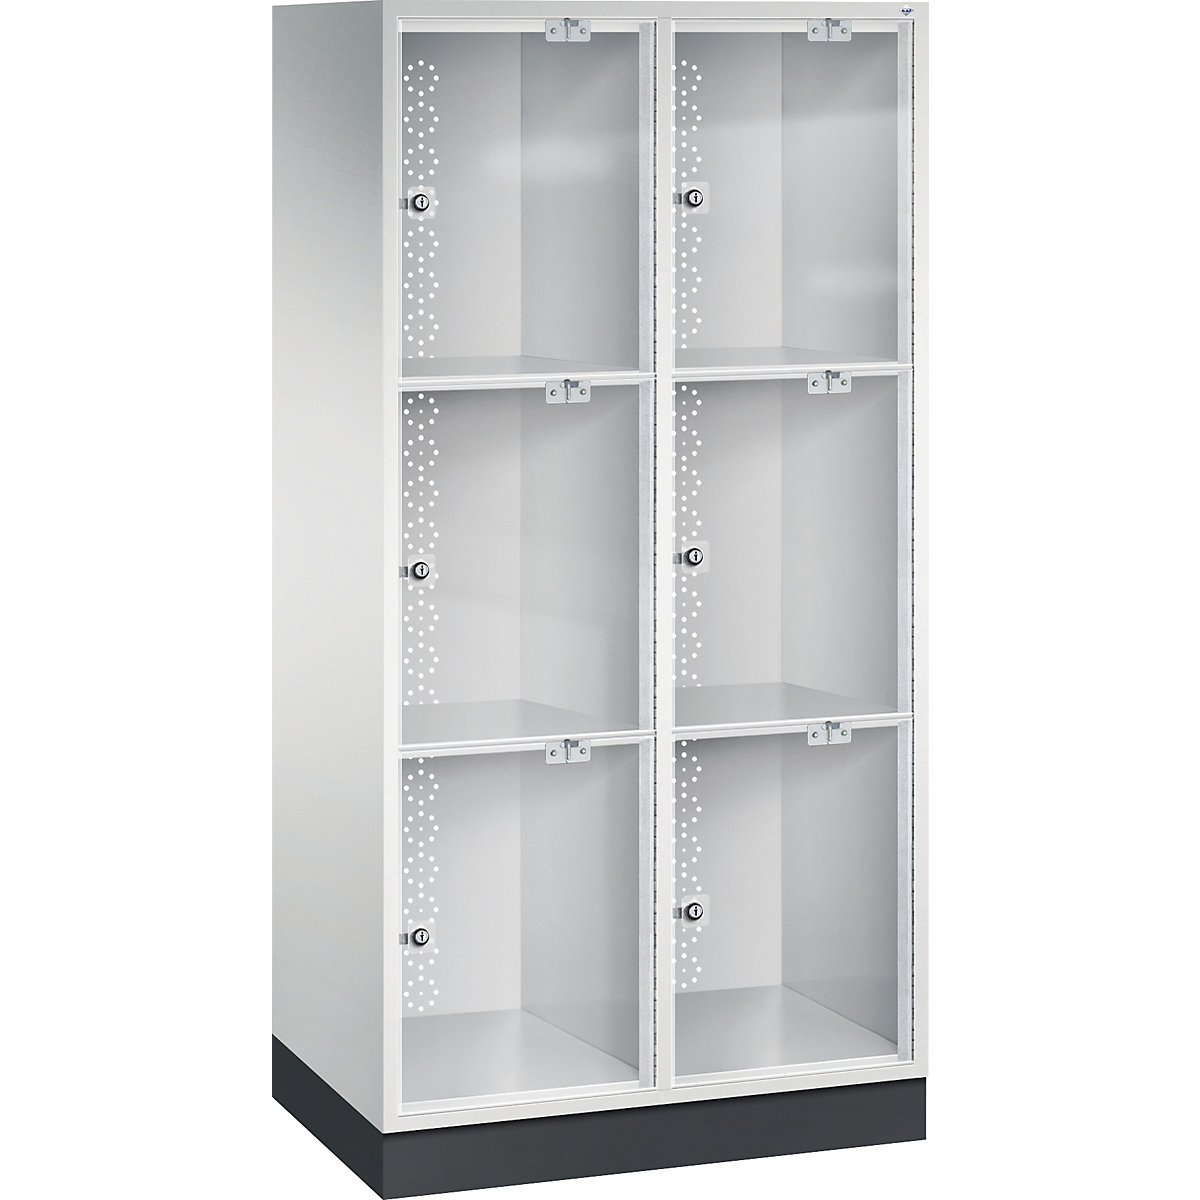 INTRO steel compartment locker with acrylic glass door – C+P